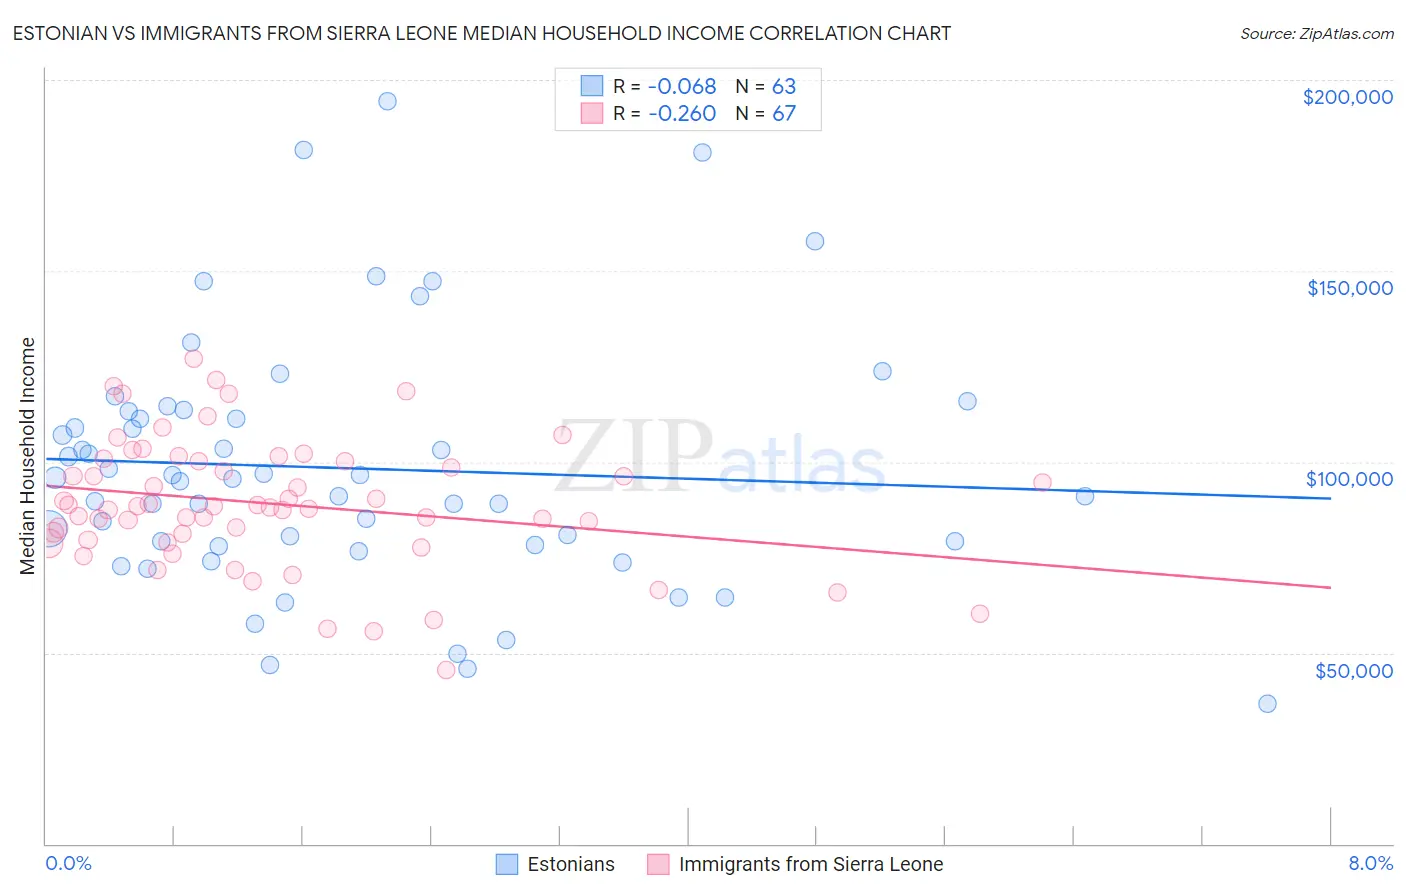 Estonian vs Immigrants from Sierra Leone Median Household Income